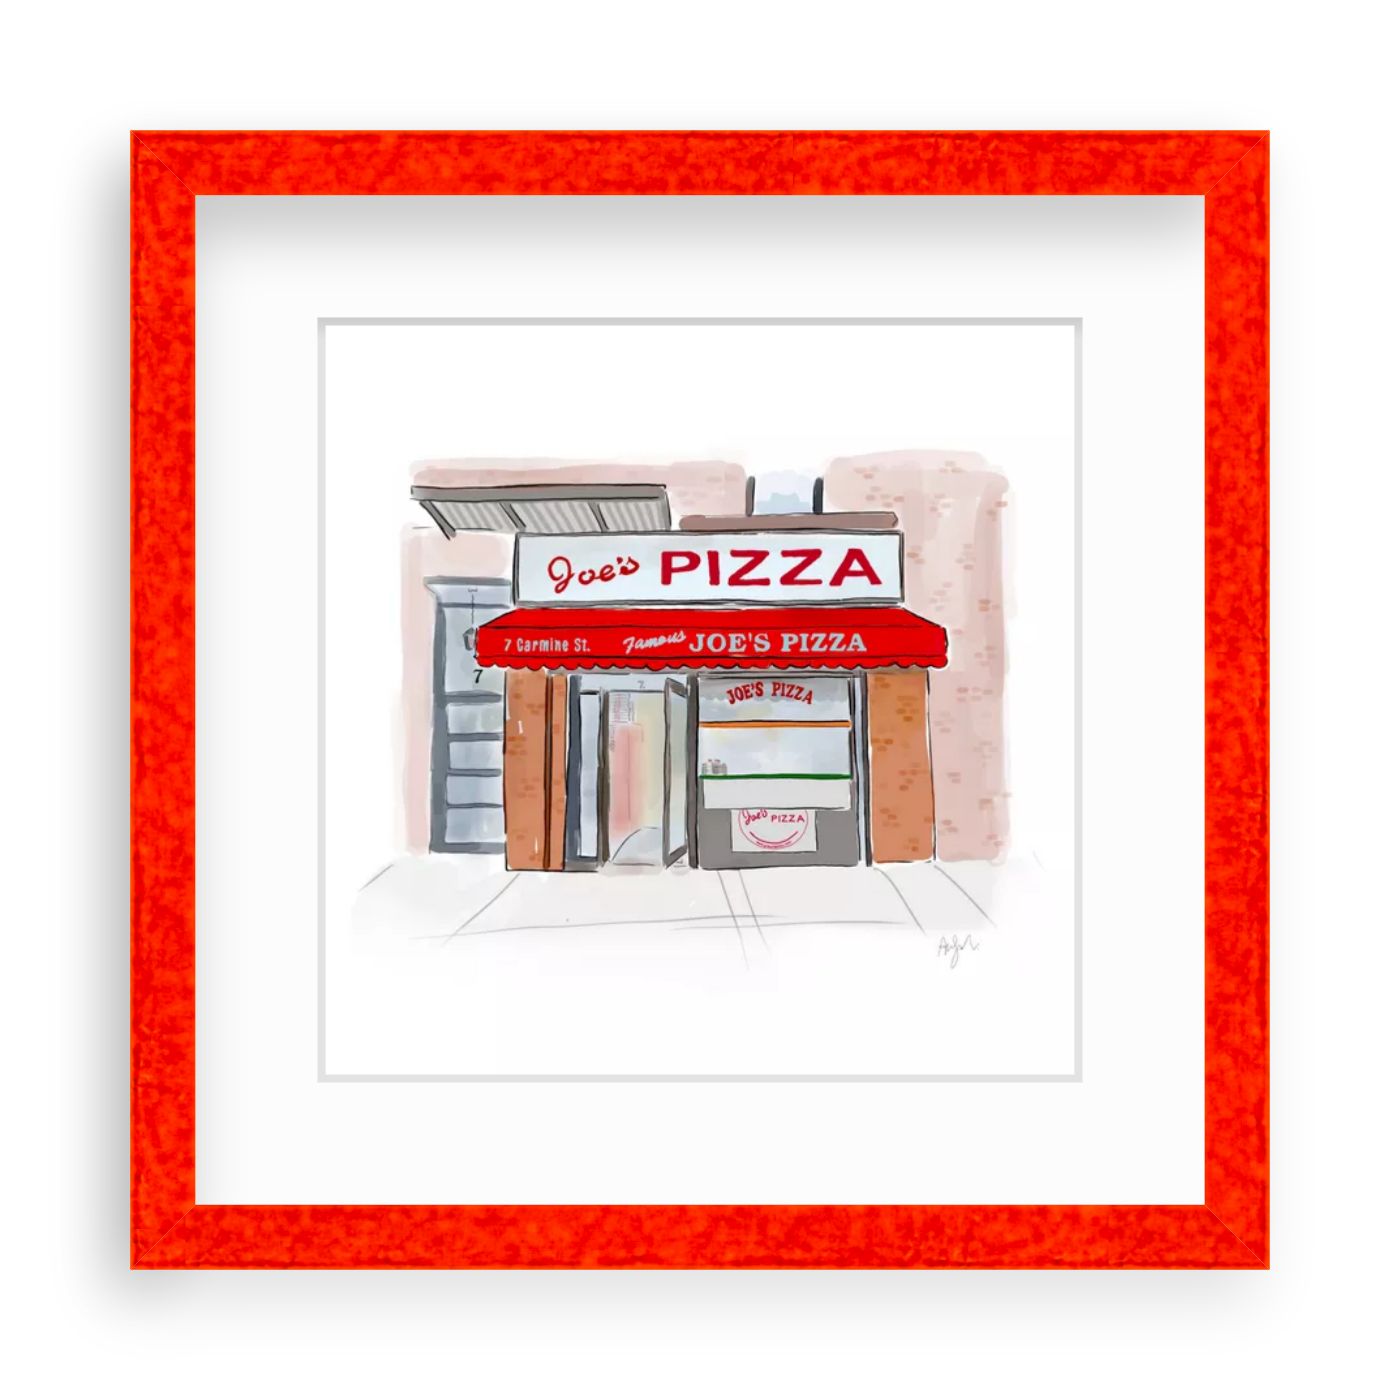 Joe’s Pizza